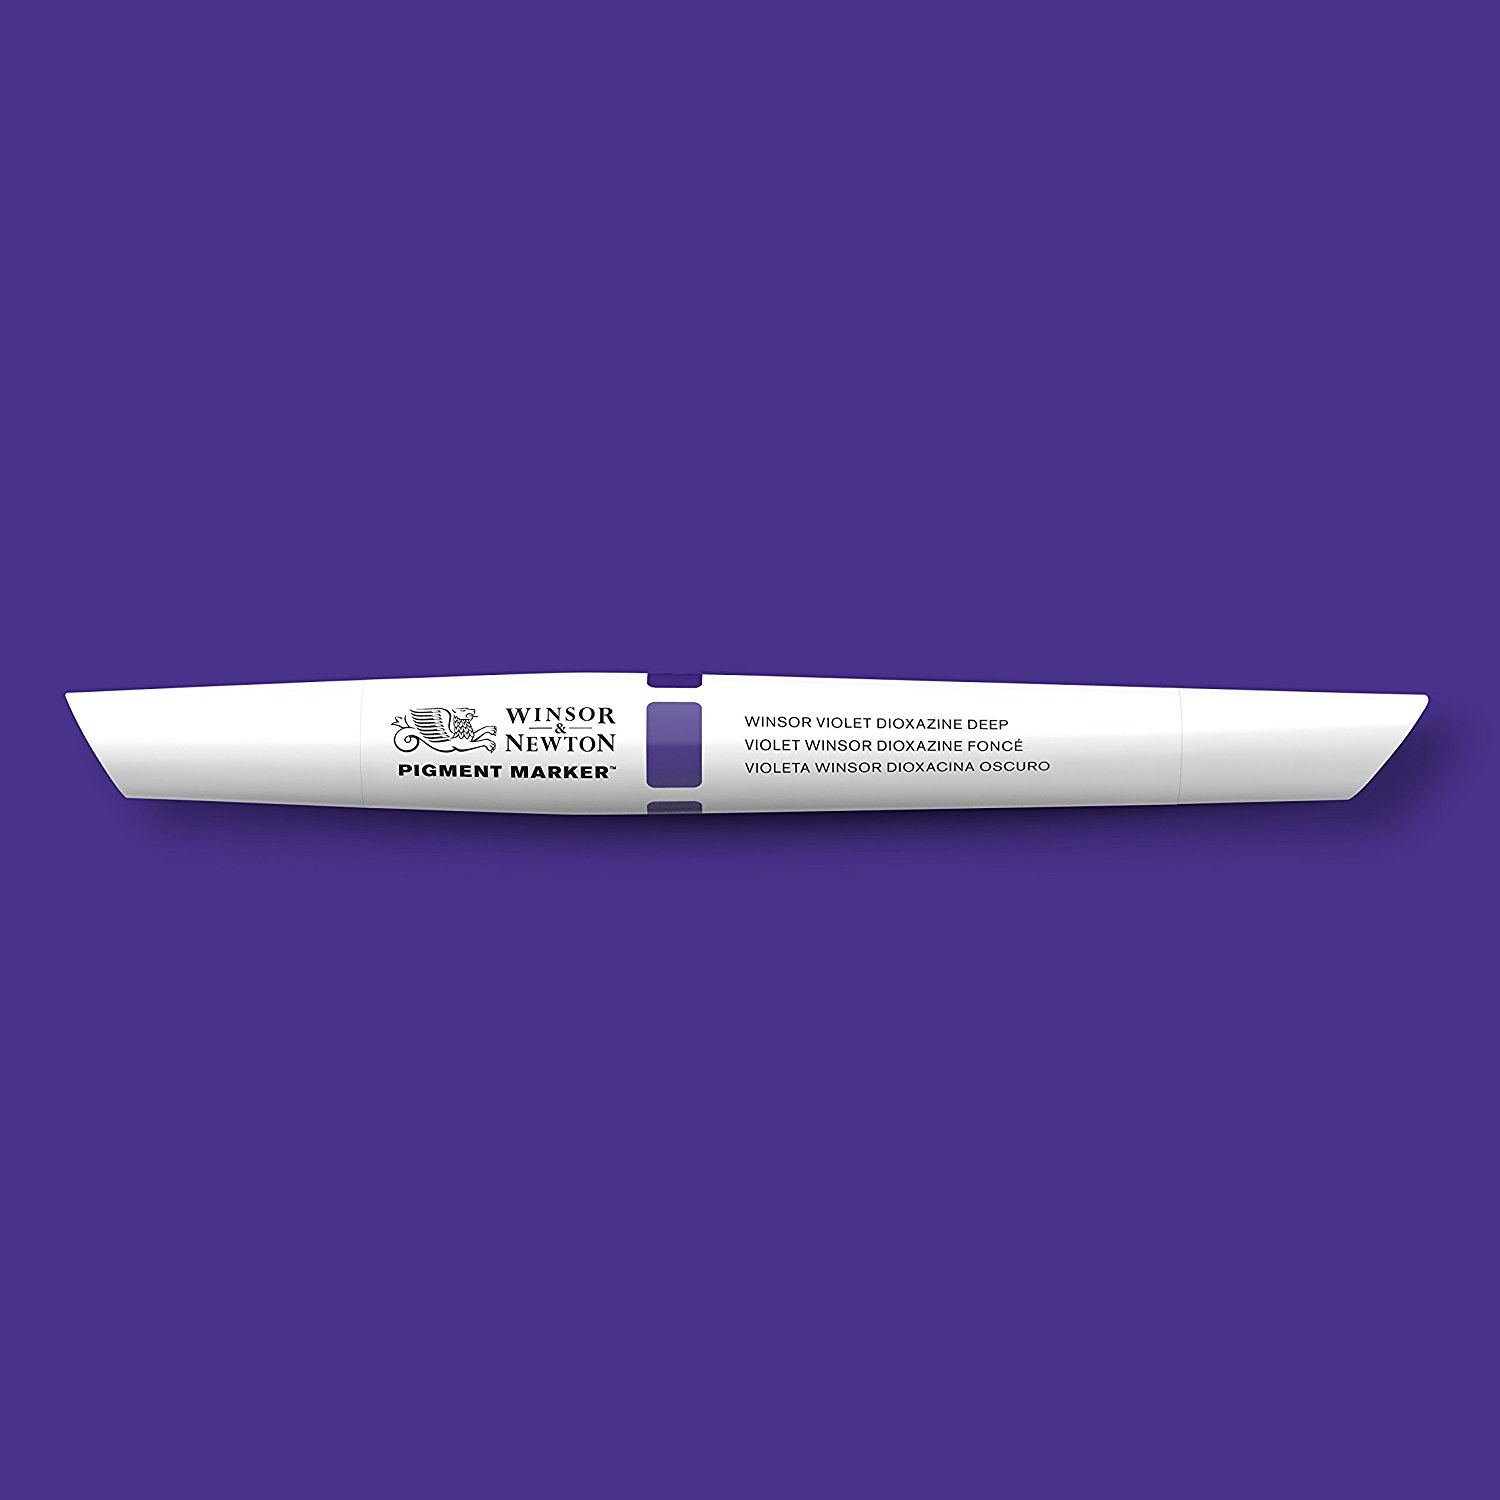 Winsor & Newton Pigment Marker - Winsor Violet Dioxine Deep